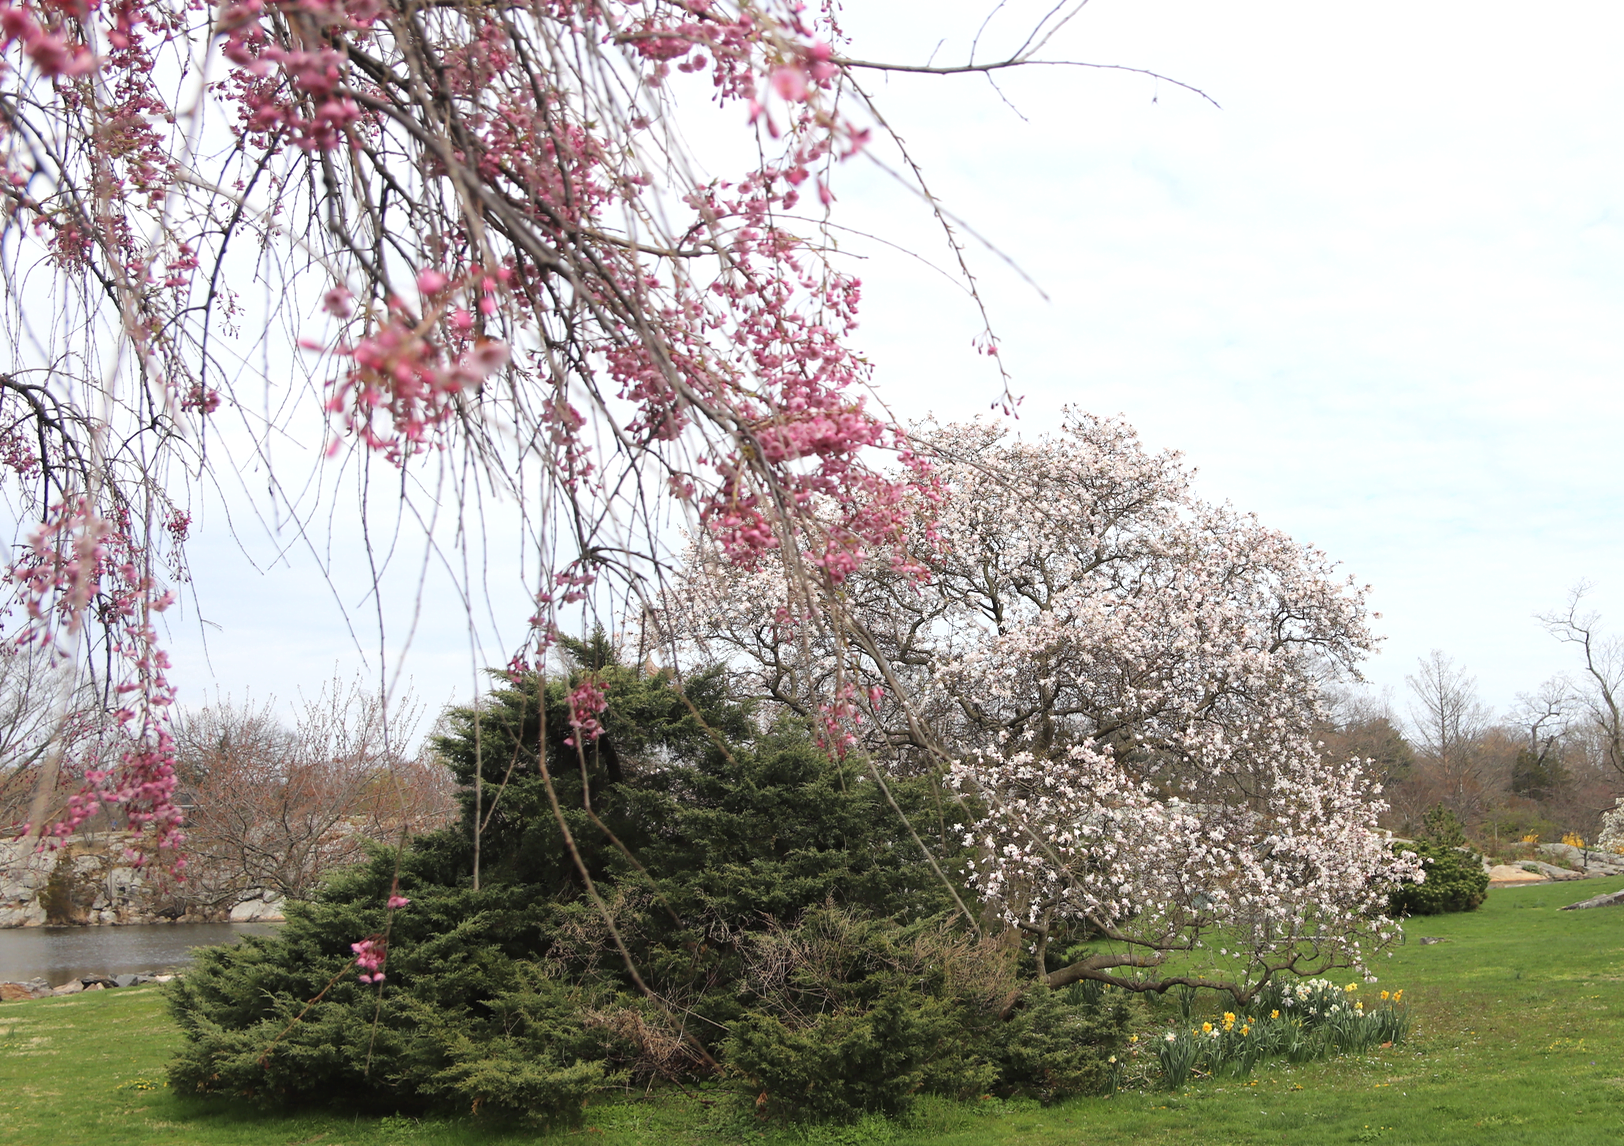 Flowering trees in Bruce Park. April 12, 2020 Photo: Leslie Yager